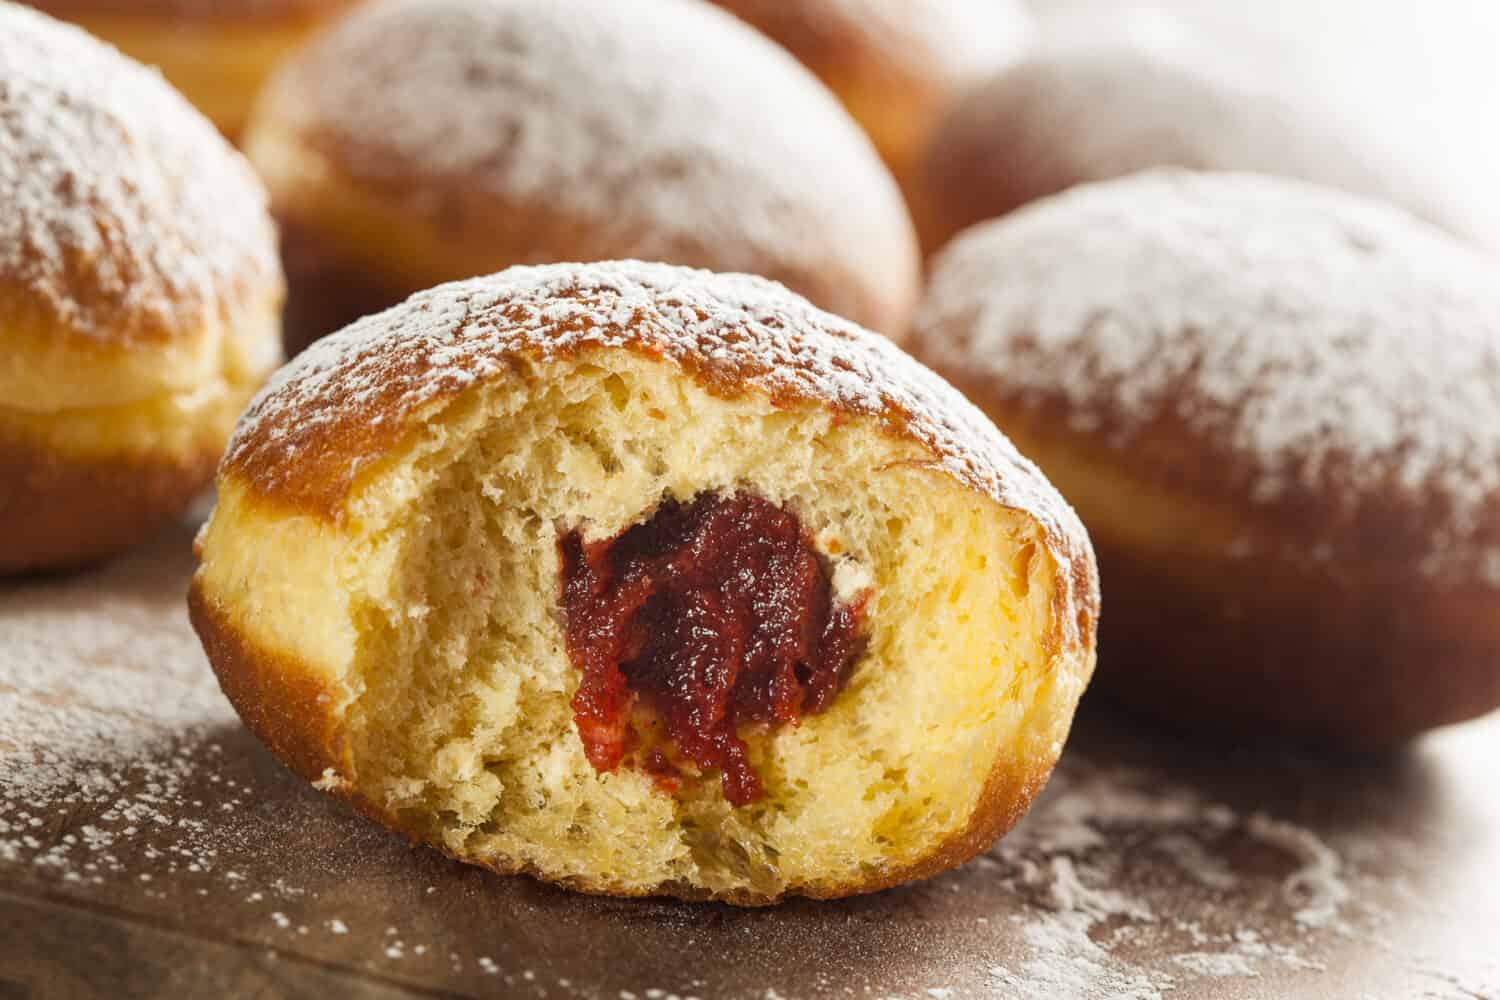 Homemade Raspberry Polish Paczki Donut with Powdered Sugar